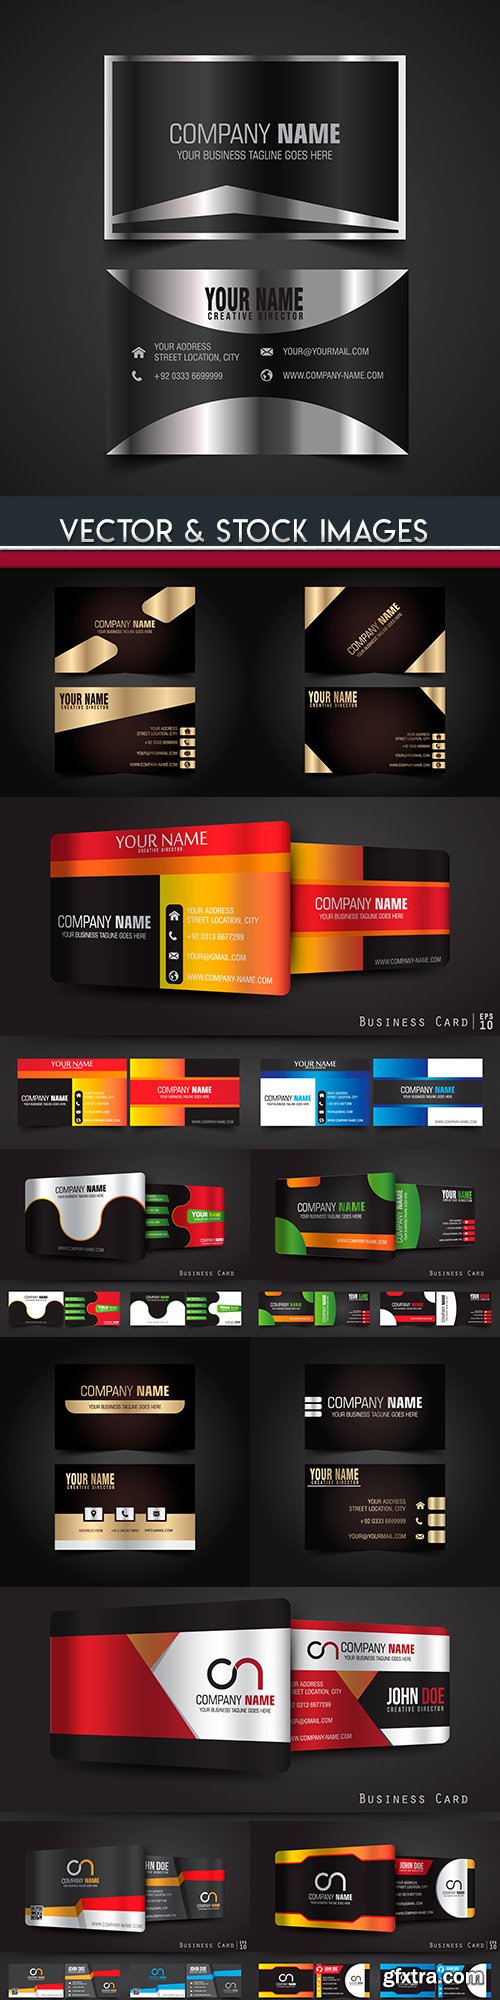 Business card templates dark design collection 38